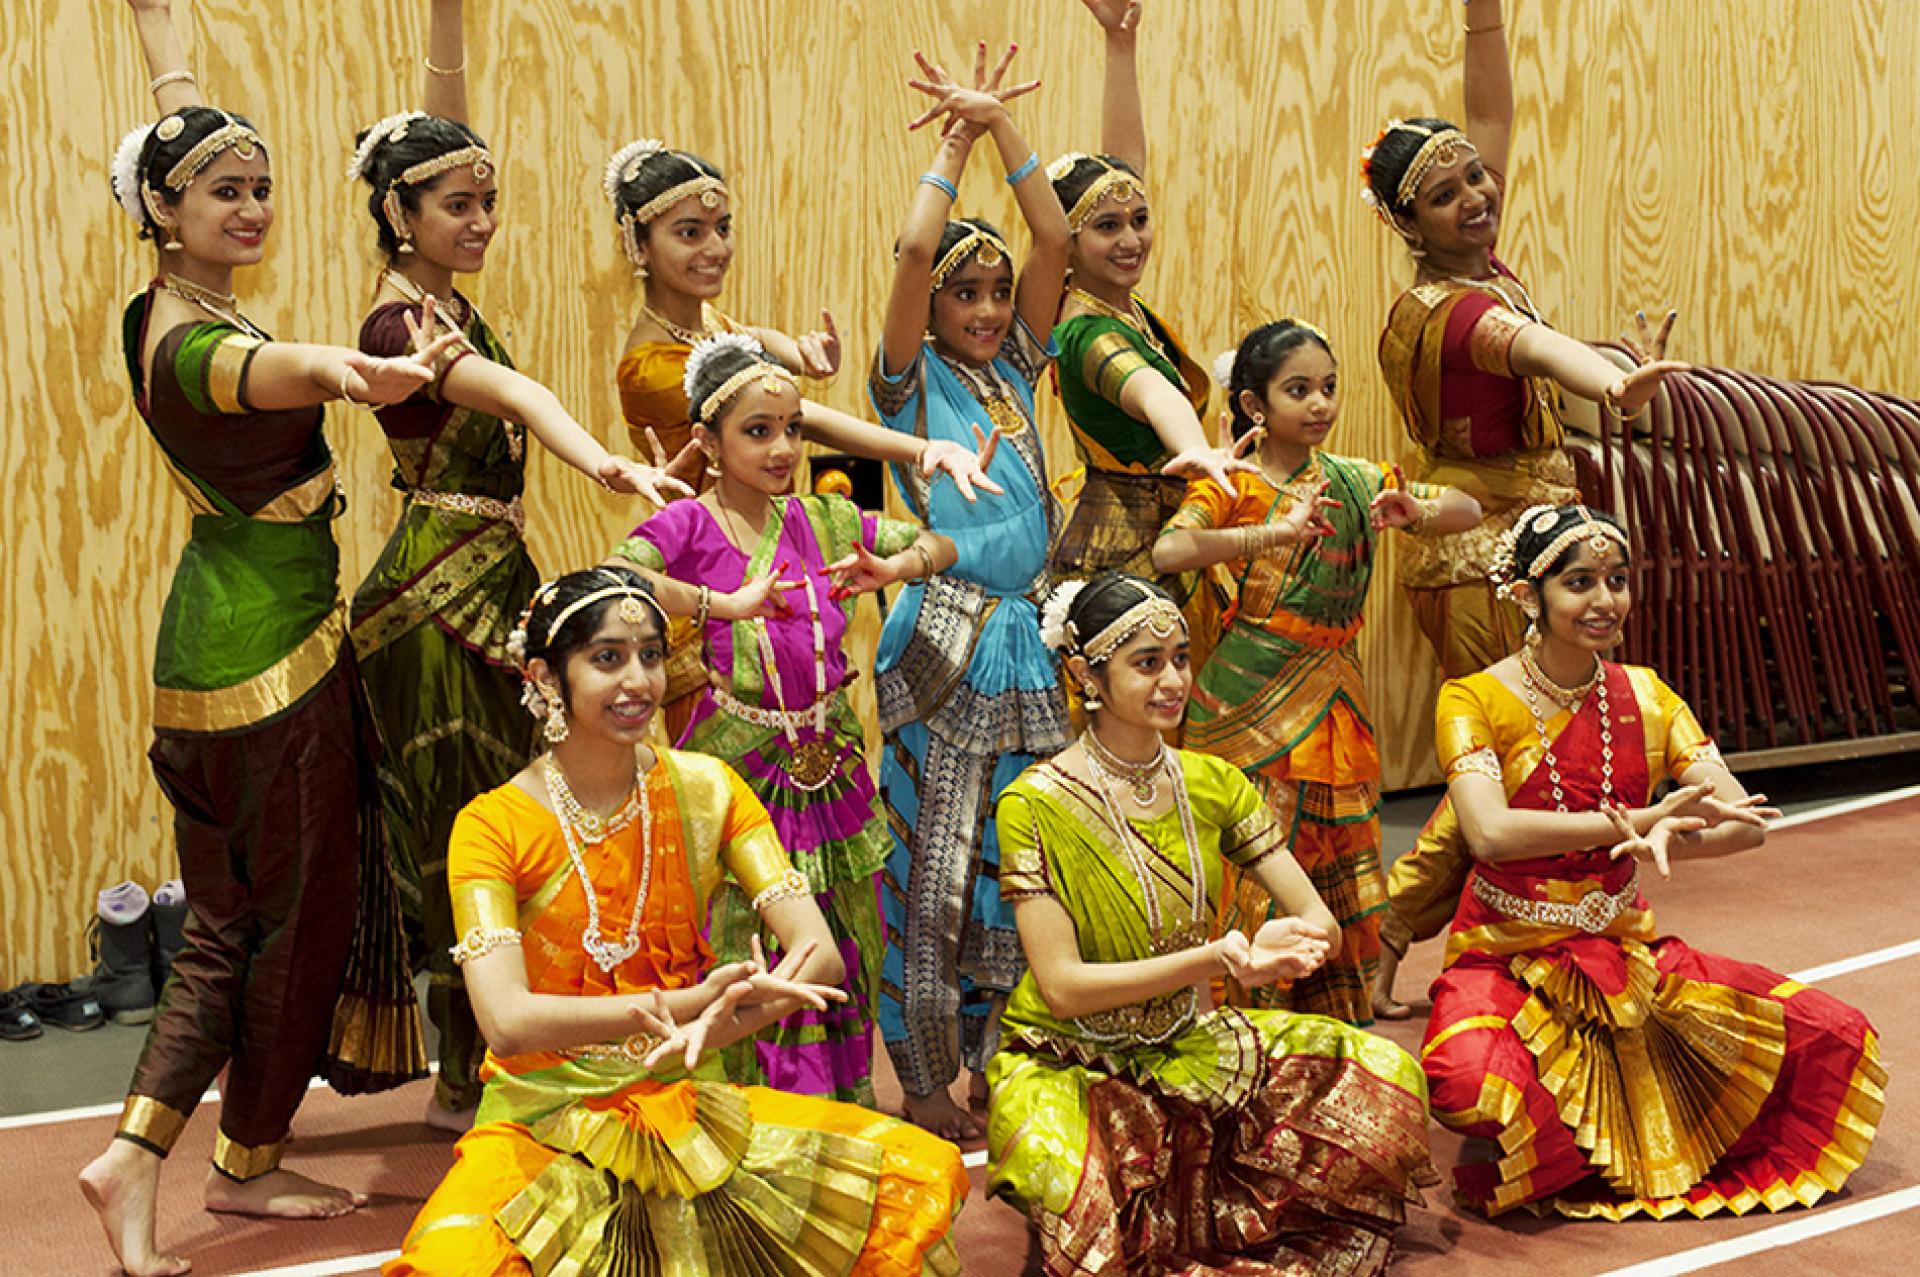 Nartan Indian folk dancers who performed at the International Festival.